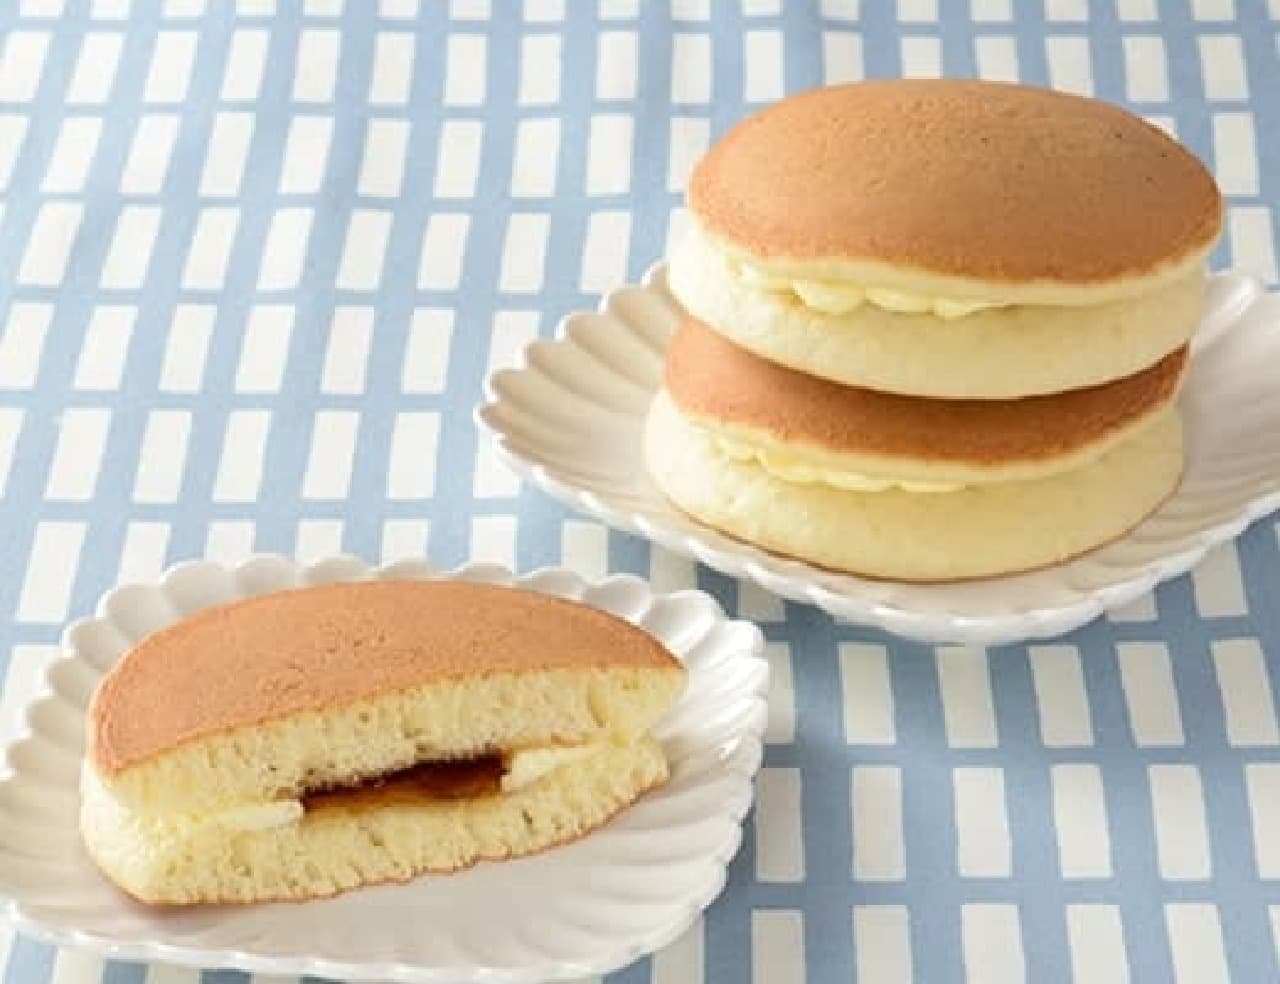 Lawson "Fluffy Hotcakes Maple & Margarine 2-pack